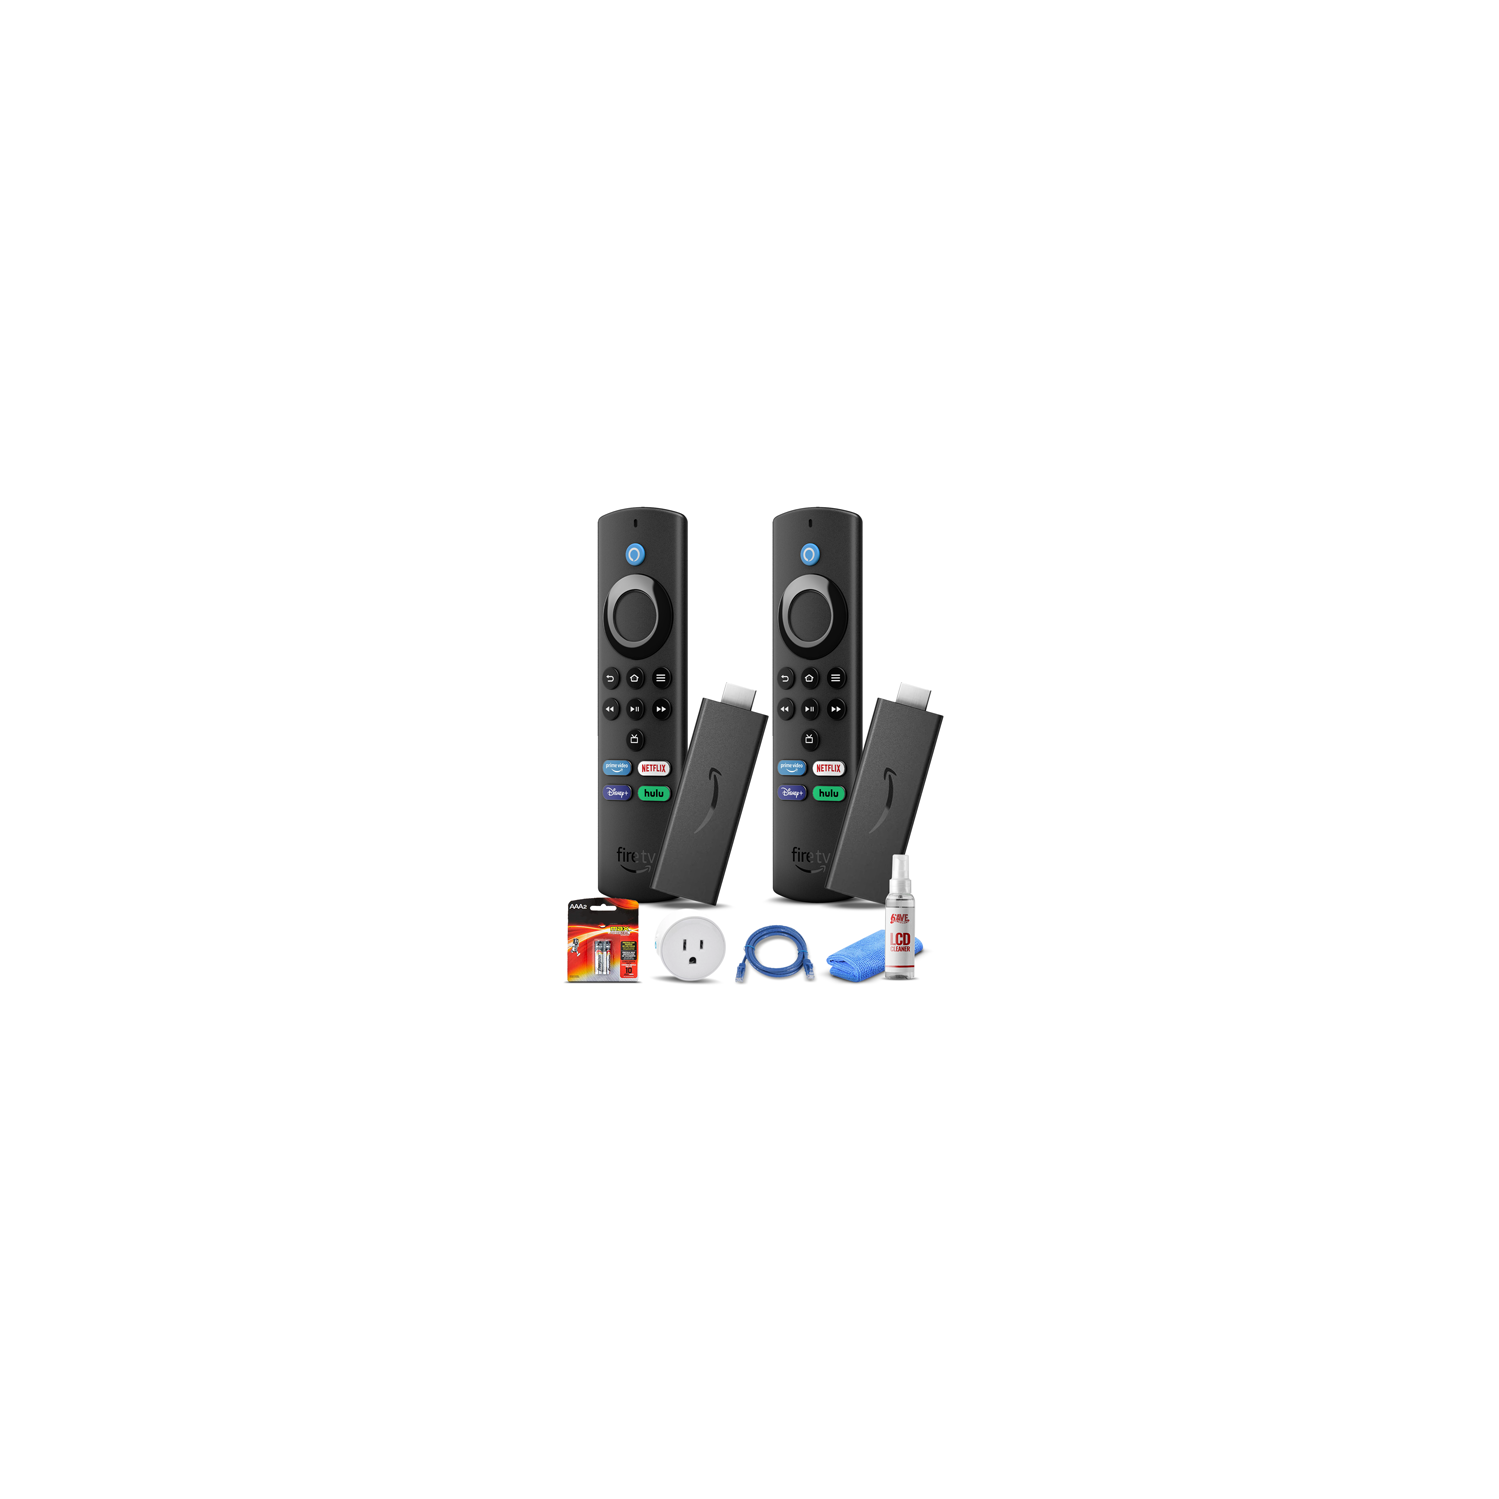 (2) Amazon Fire TV Stick 4K Max + Smart Plug + Cat5 Cable + Batteries